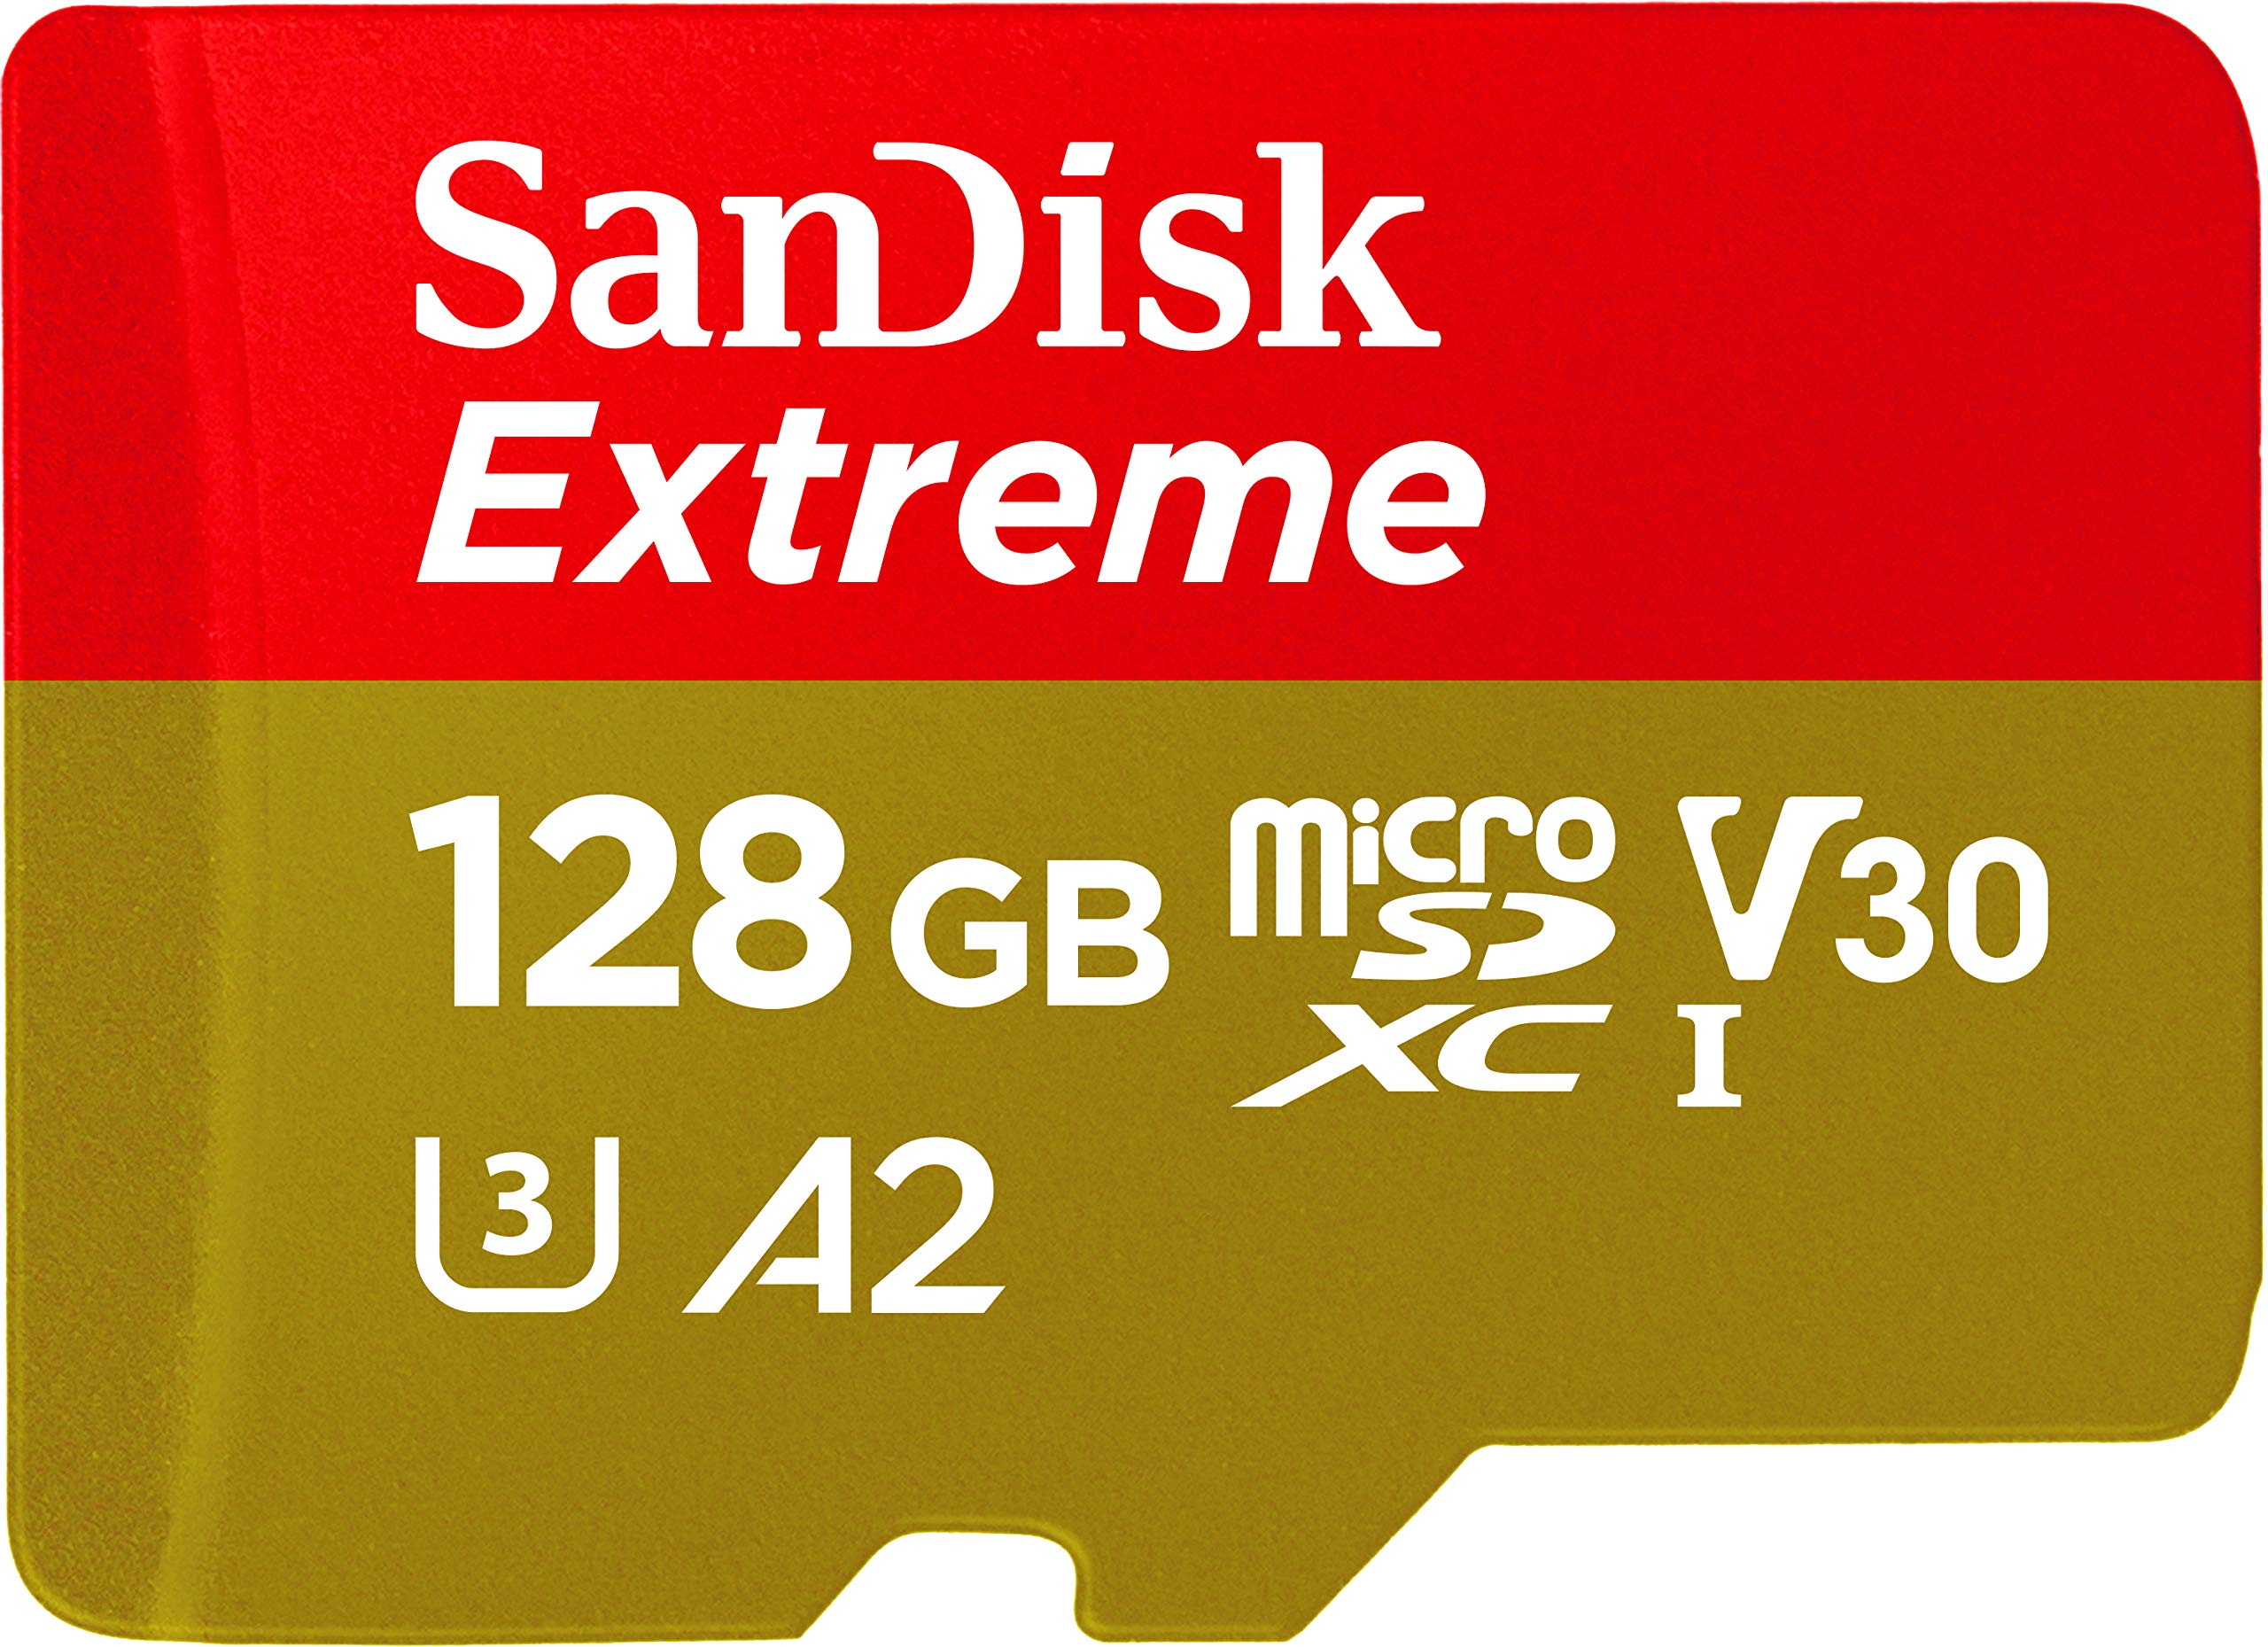 Sandisk Extreme 128GB microSD Card